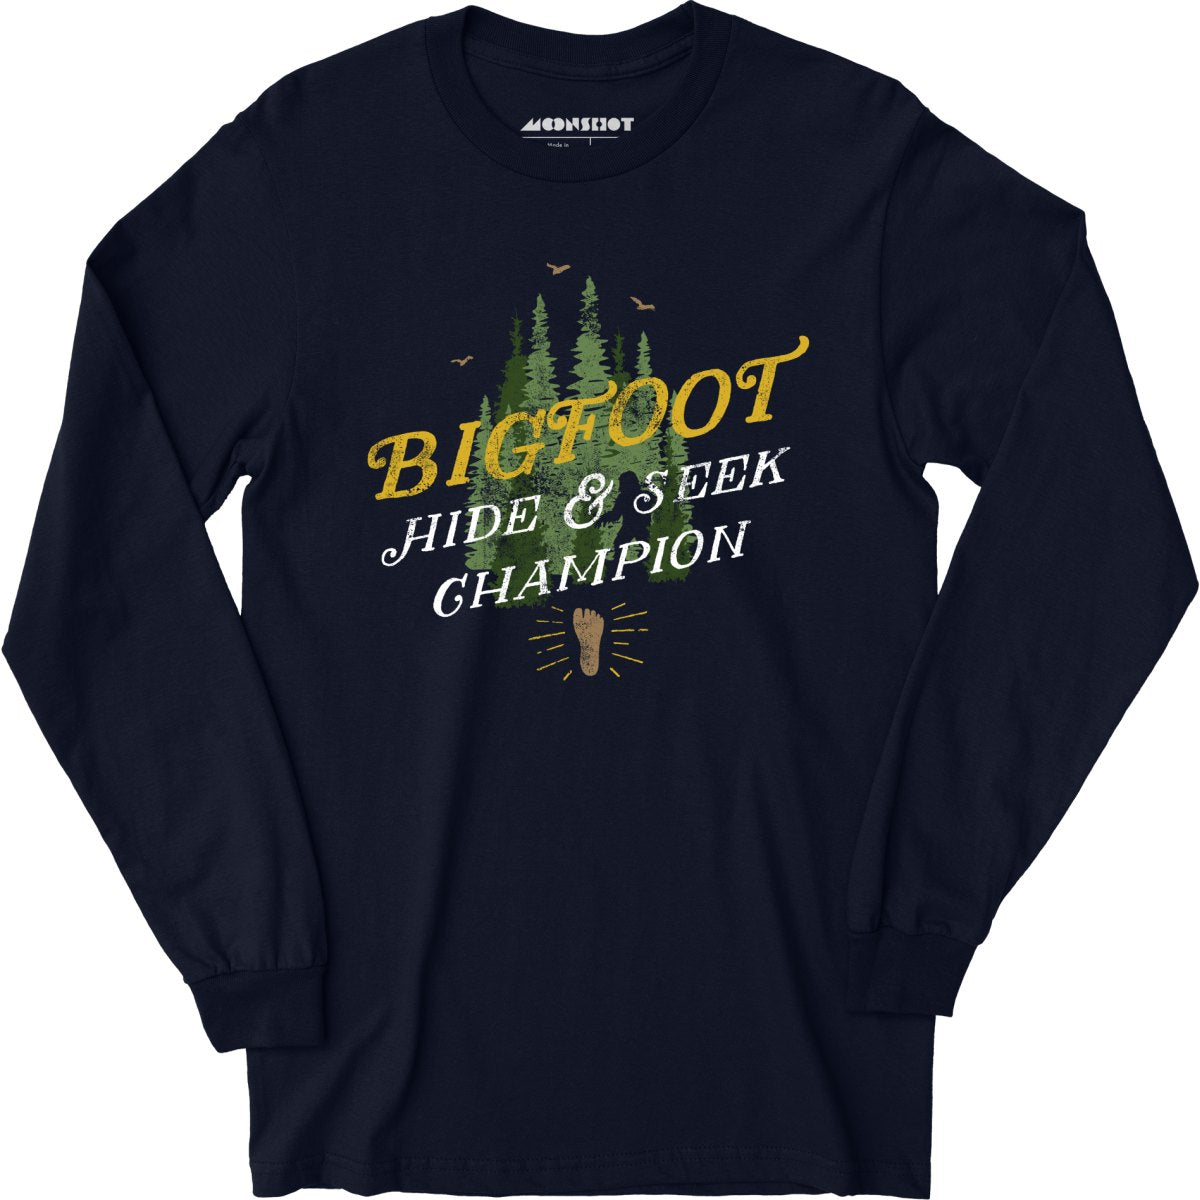 Bigfoot Hide & Seek Champion - Long Sleeve T-Shirt